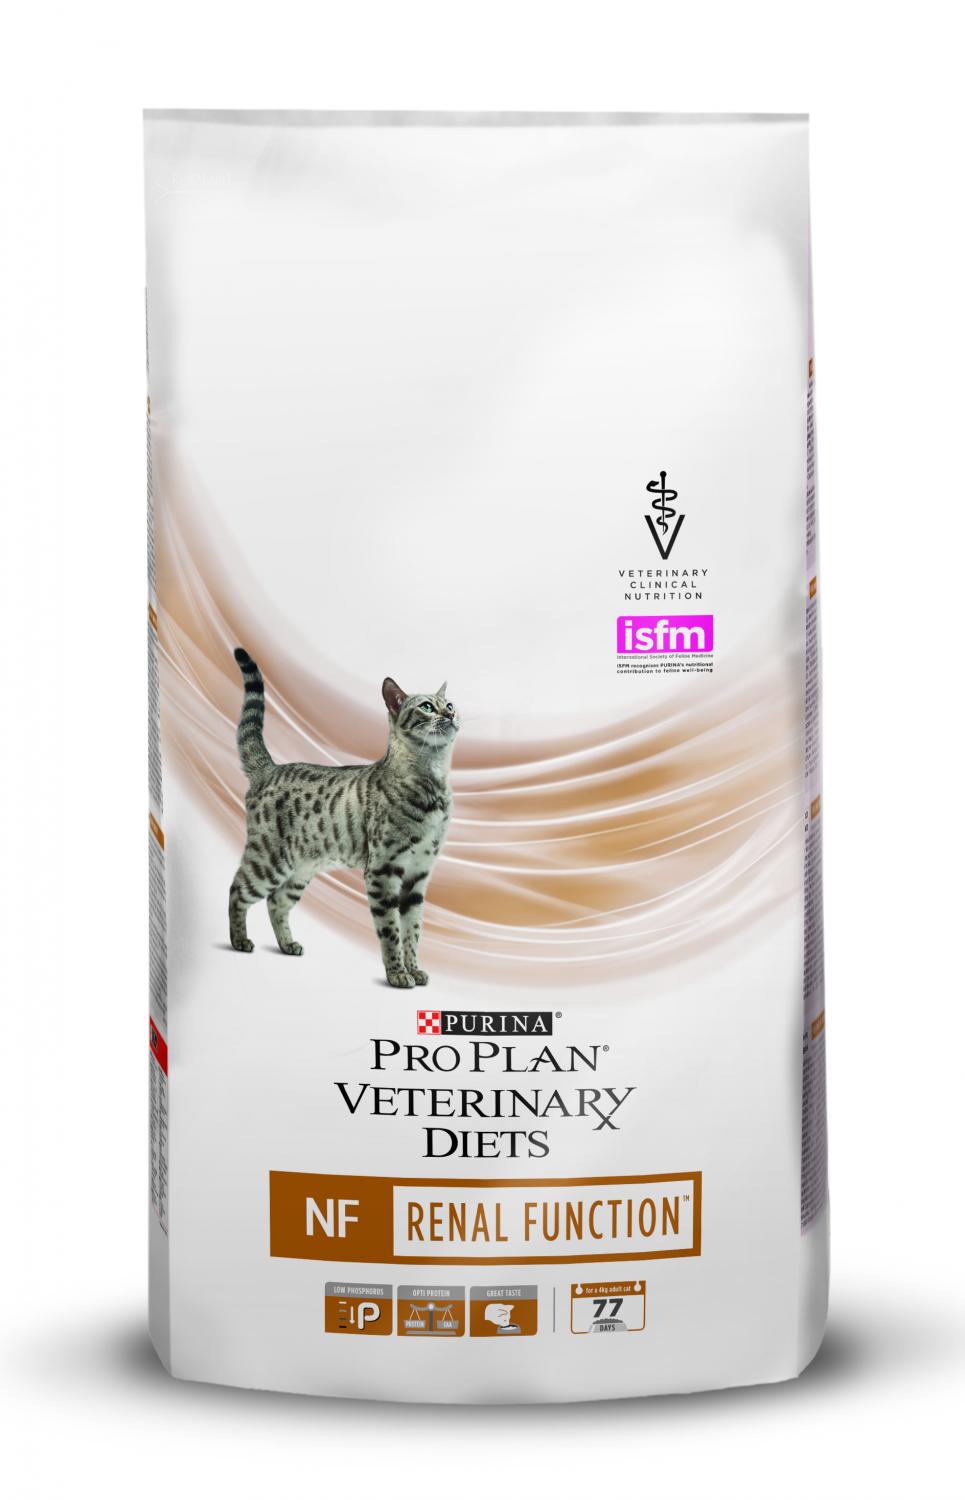 Purina Pro Plan Veterinary Diets Feline NF Renal Function